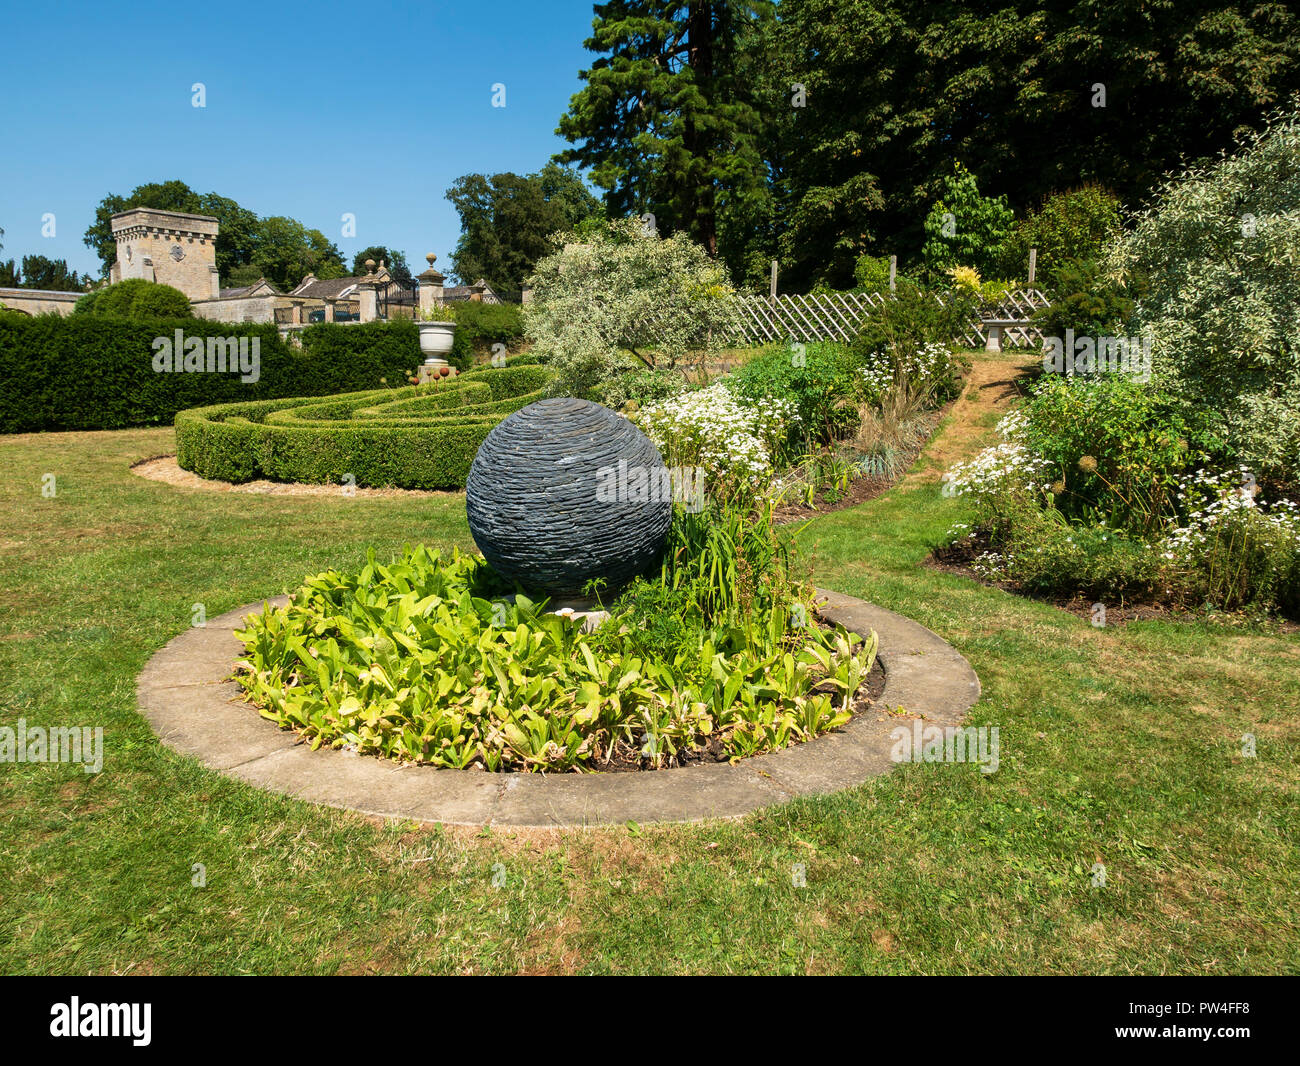 The White Space Garden, Easton Walled Gardens, Easton, Grantham, Lincolnshire, England, UK. Stock Photo